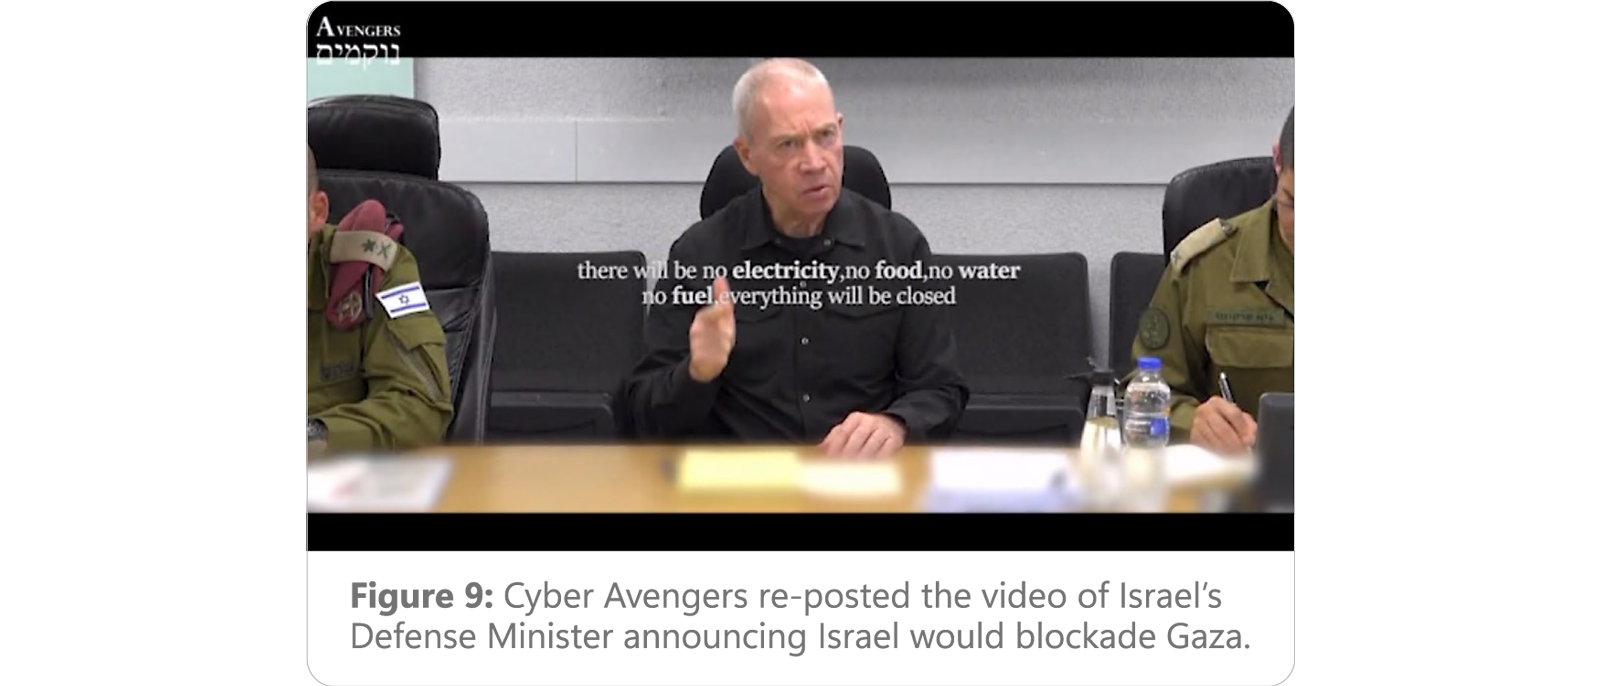 AVENGERS - No electricity, food, water, fuel. Cyber Avengers repost video Israel's blockade